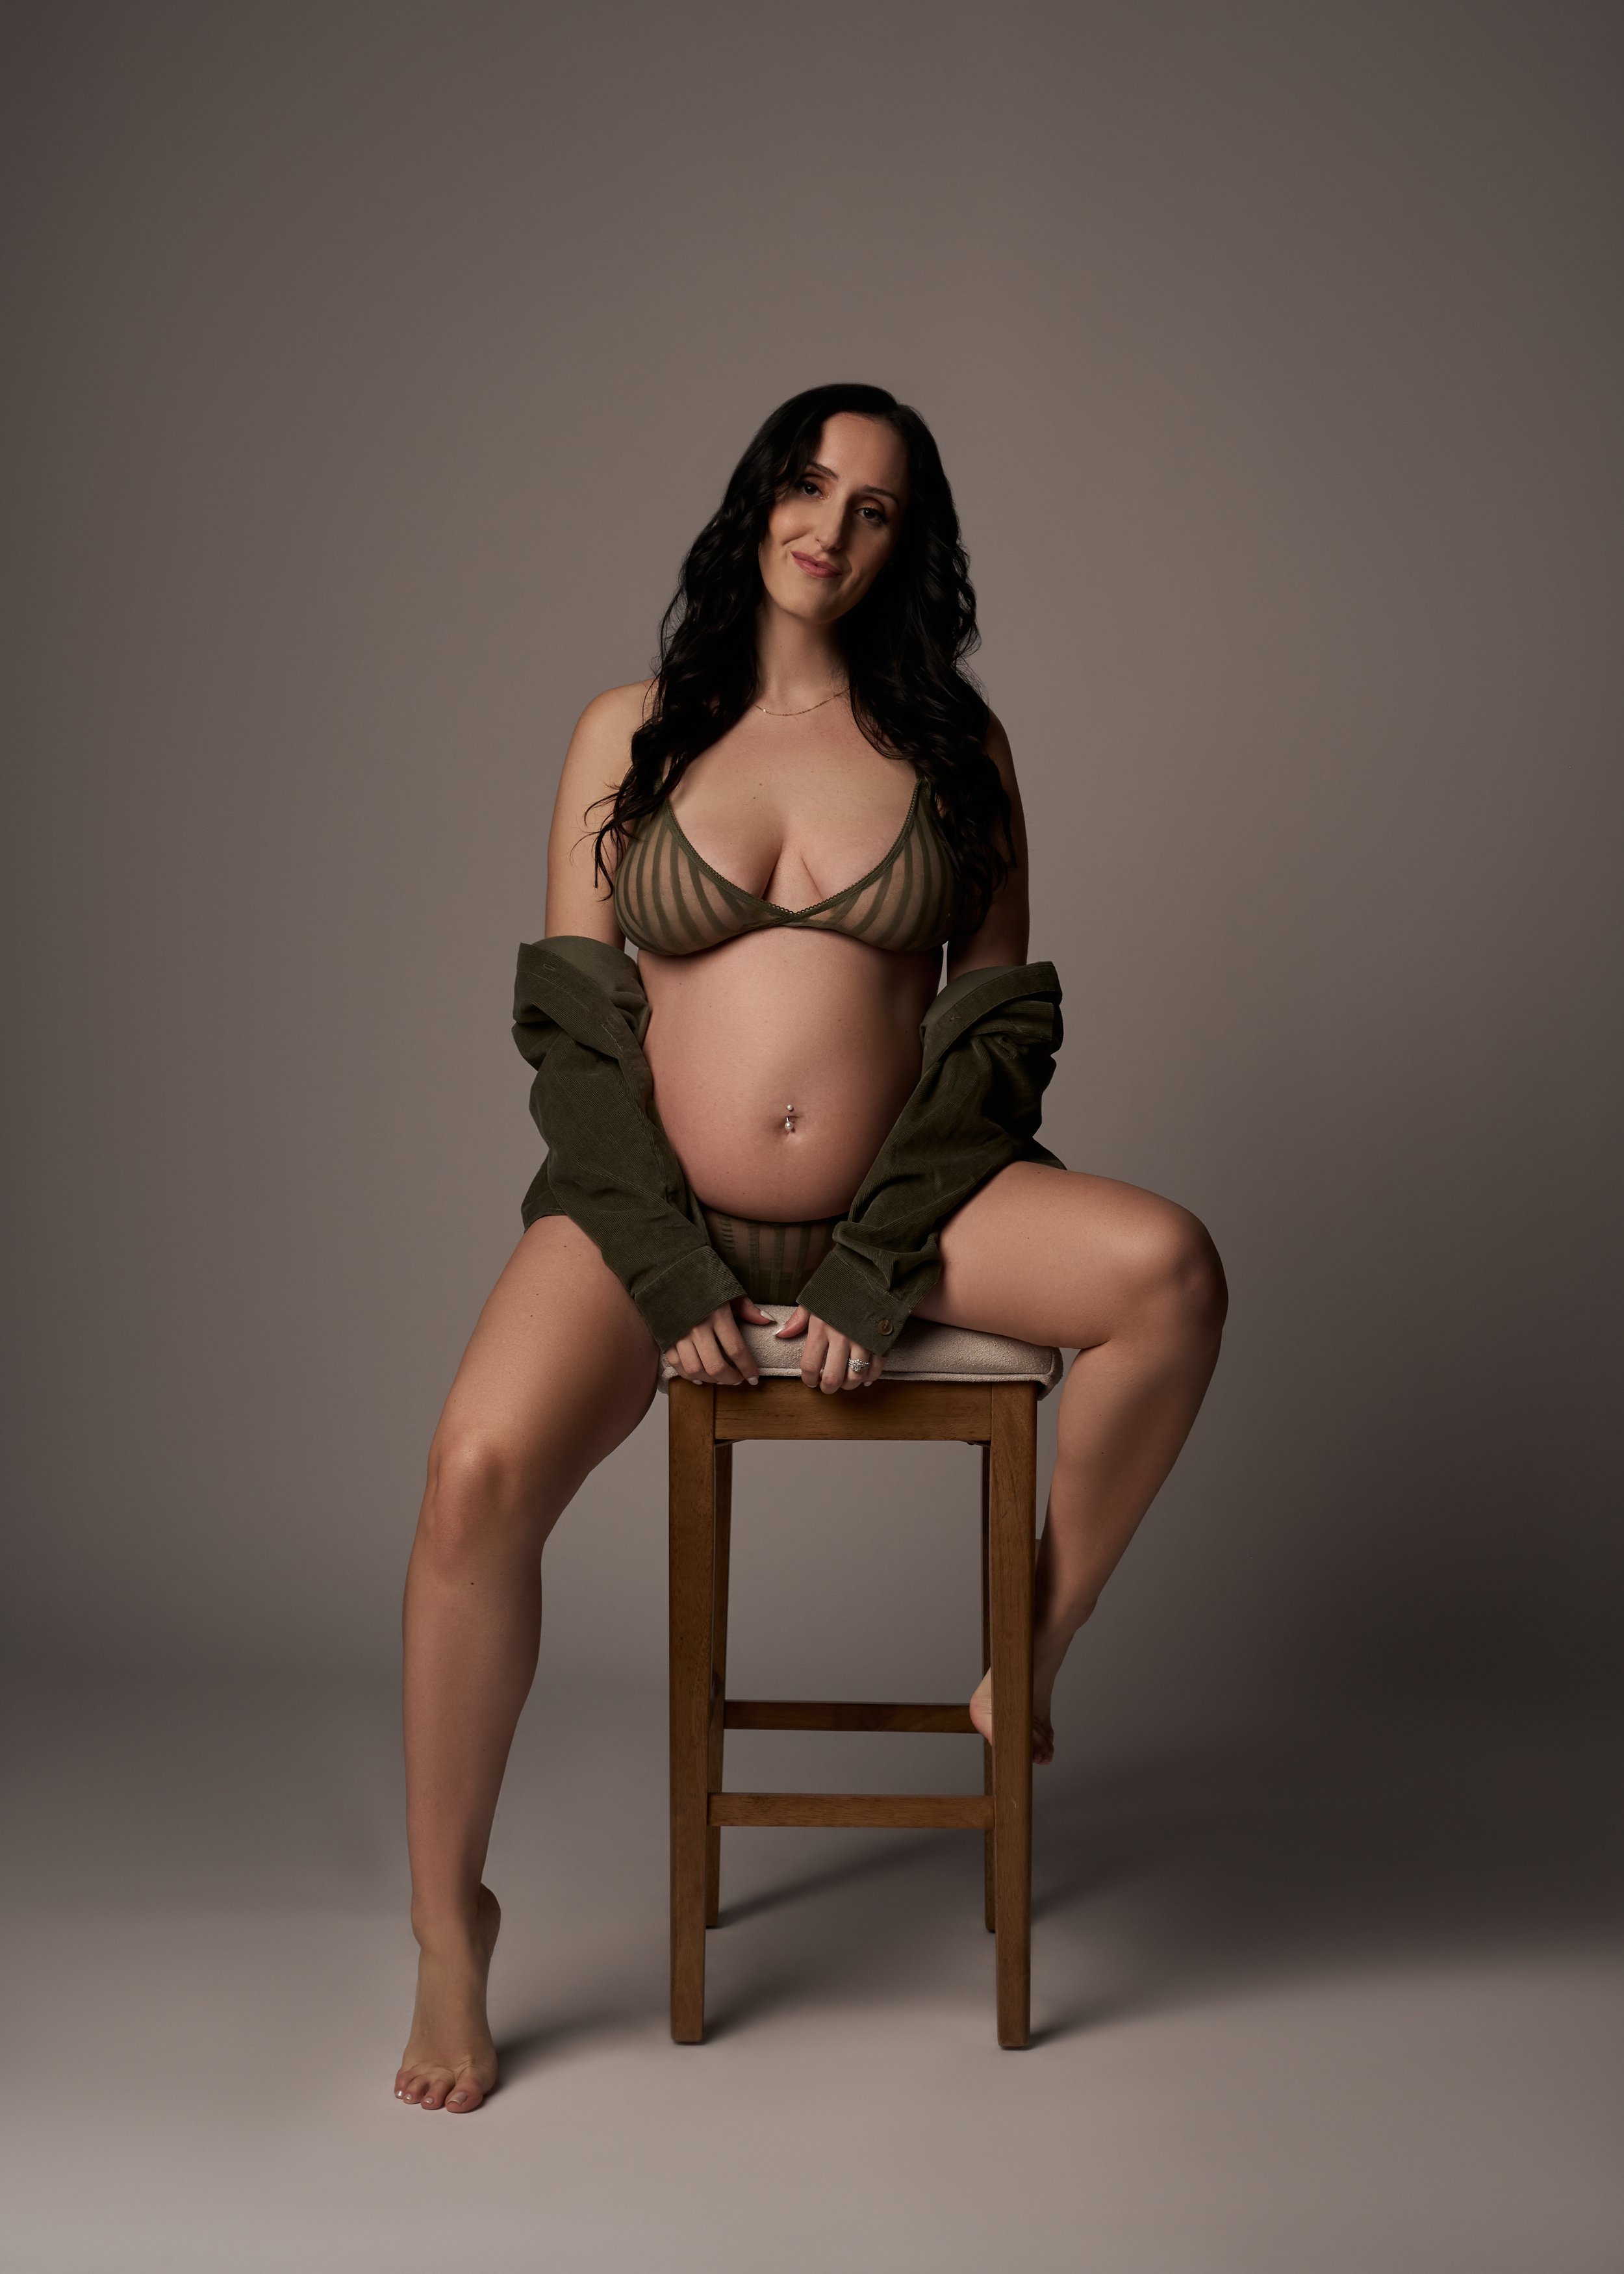 pregnant woman sitting on stool in green lingerie.jpg